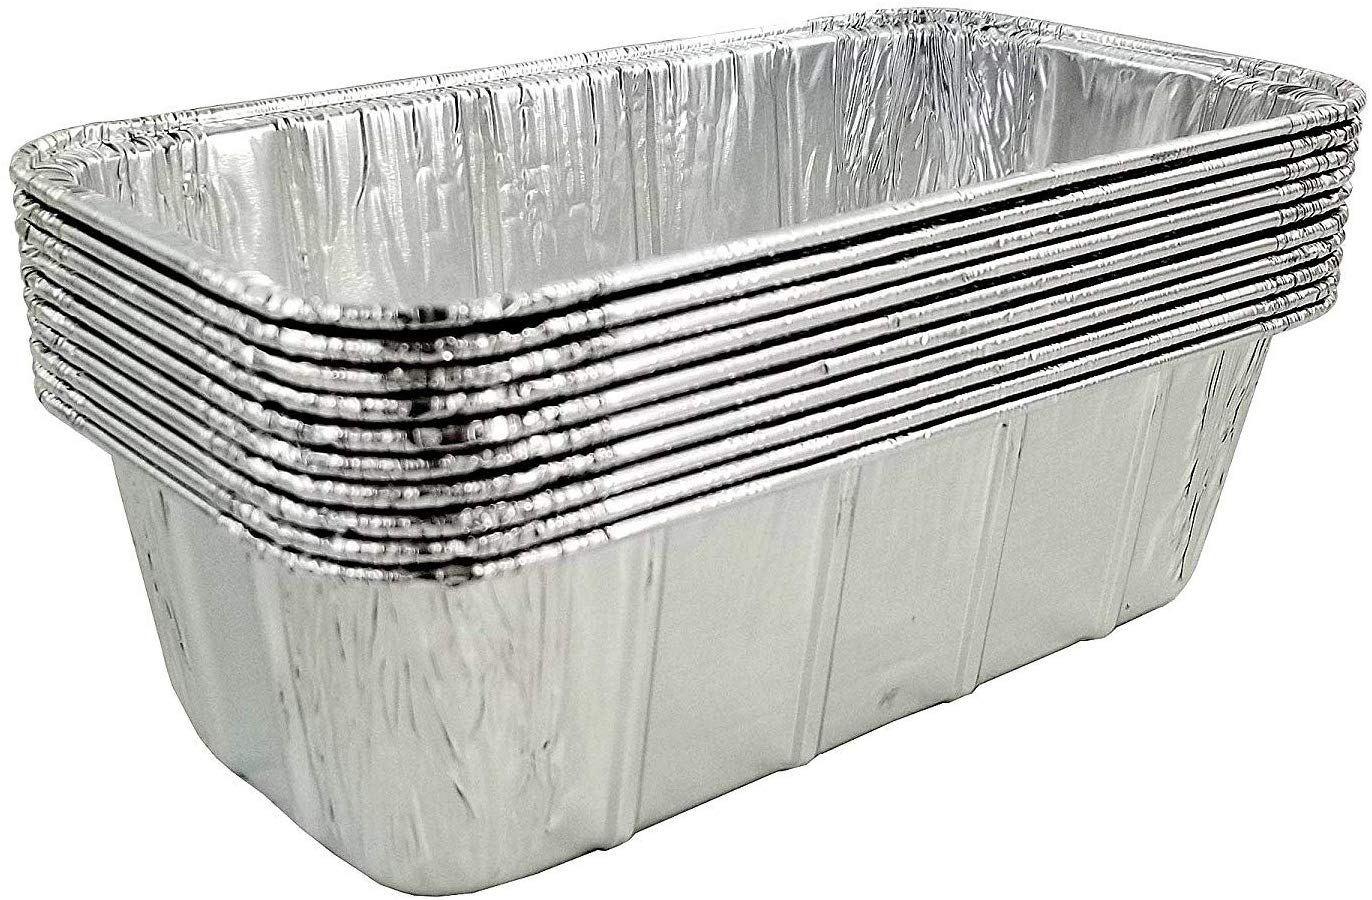 1 1/2 lb. Aluminum Foil Loaf Pan w/Dome Lid 50/PK